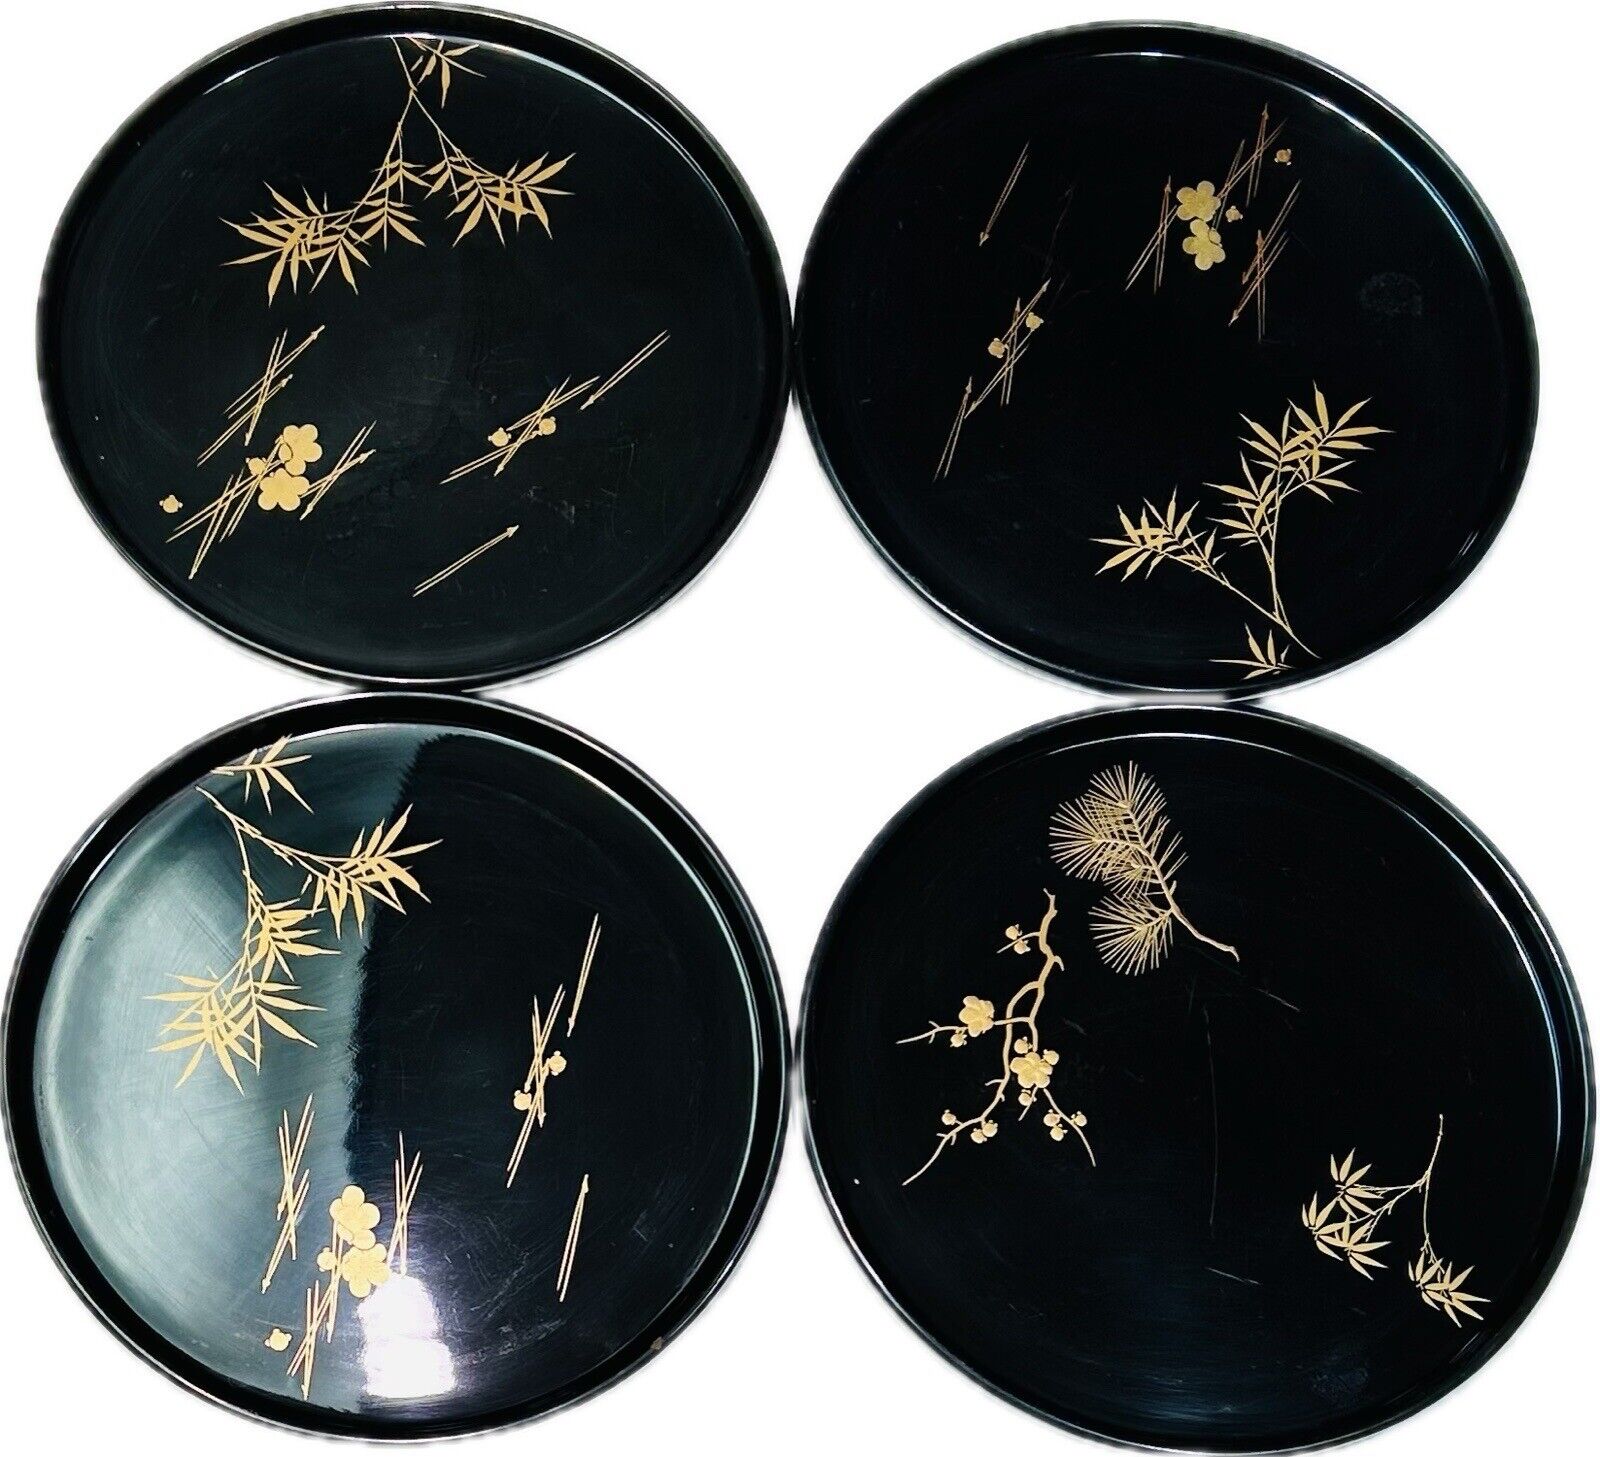 4 Vintage Yamanaka Lacquerware Plates Black and Gold Japan